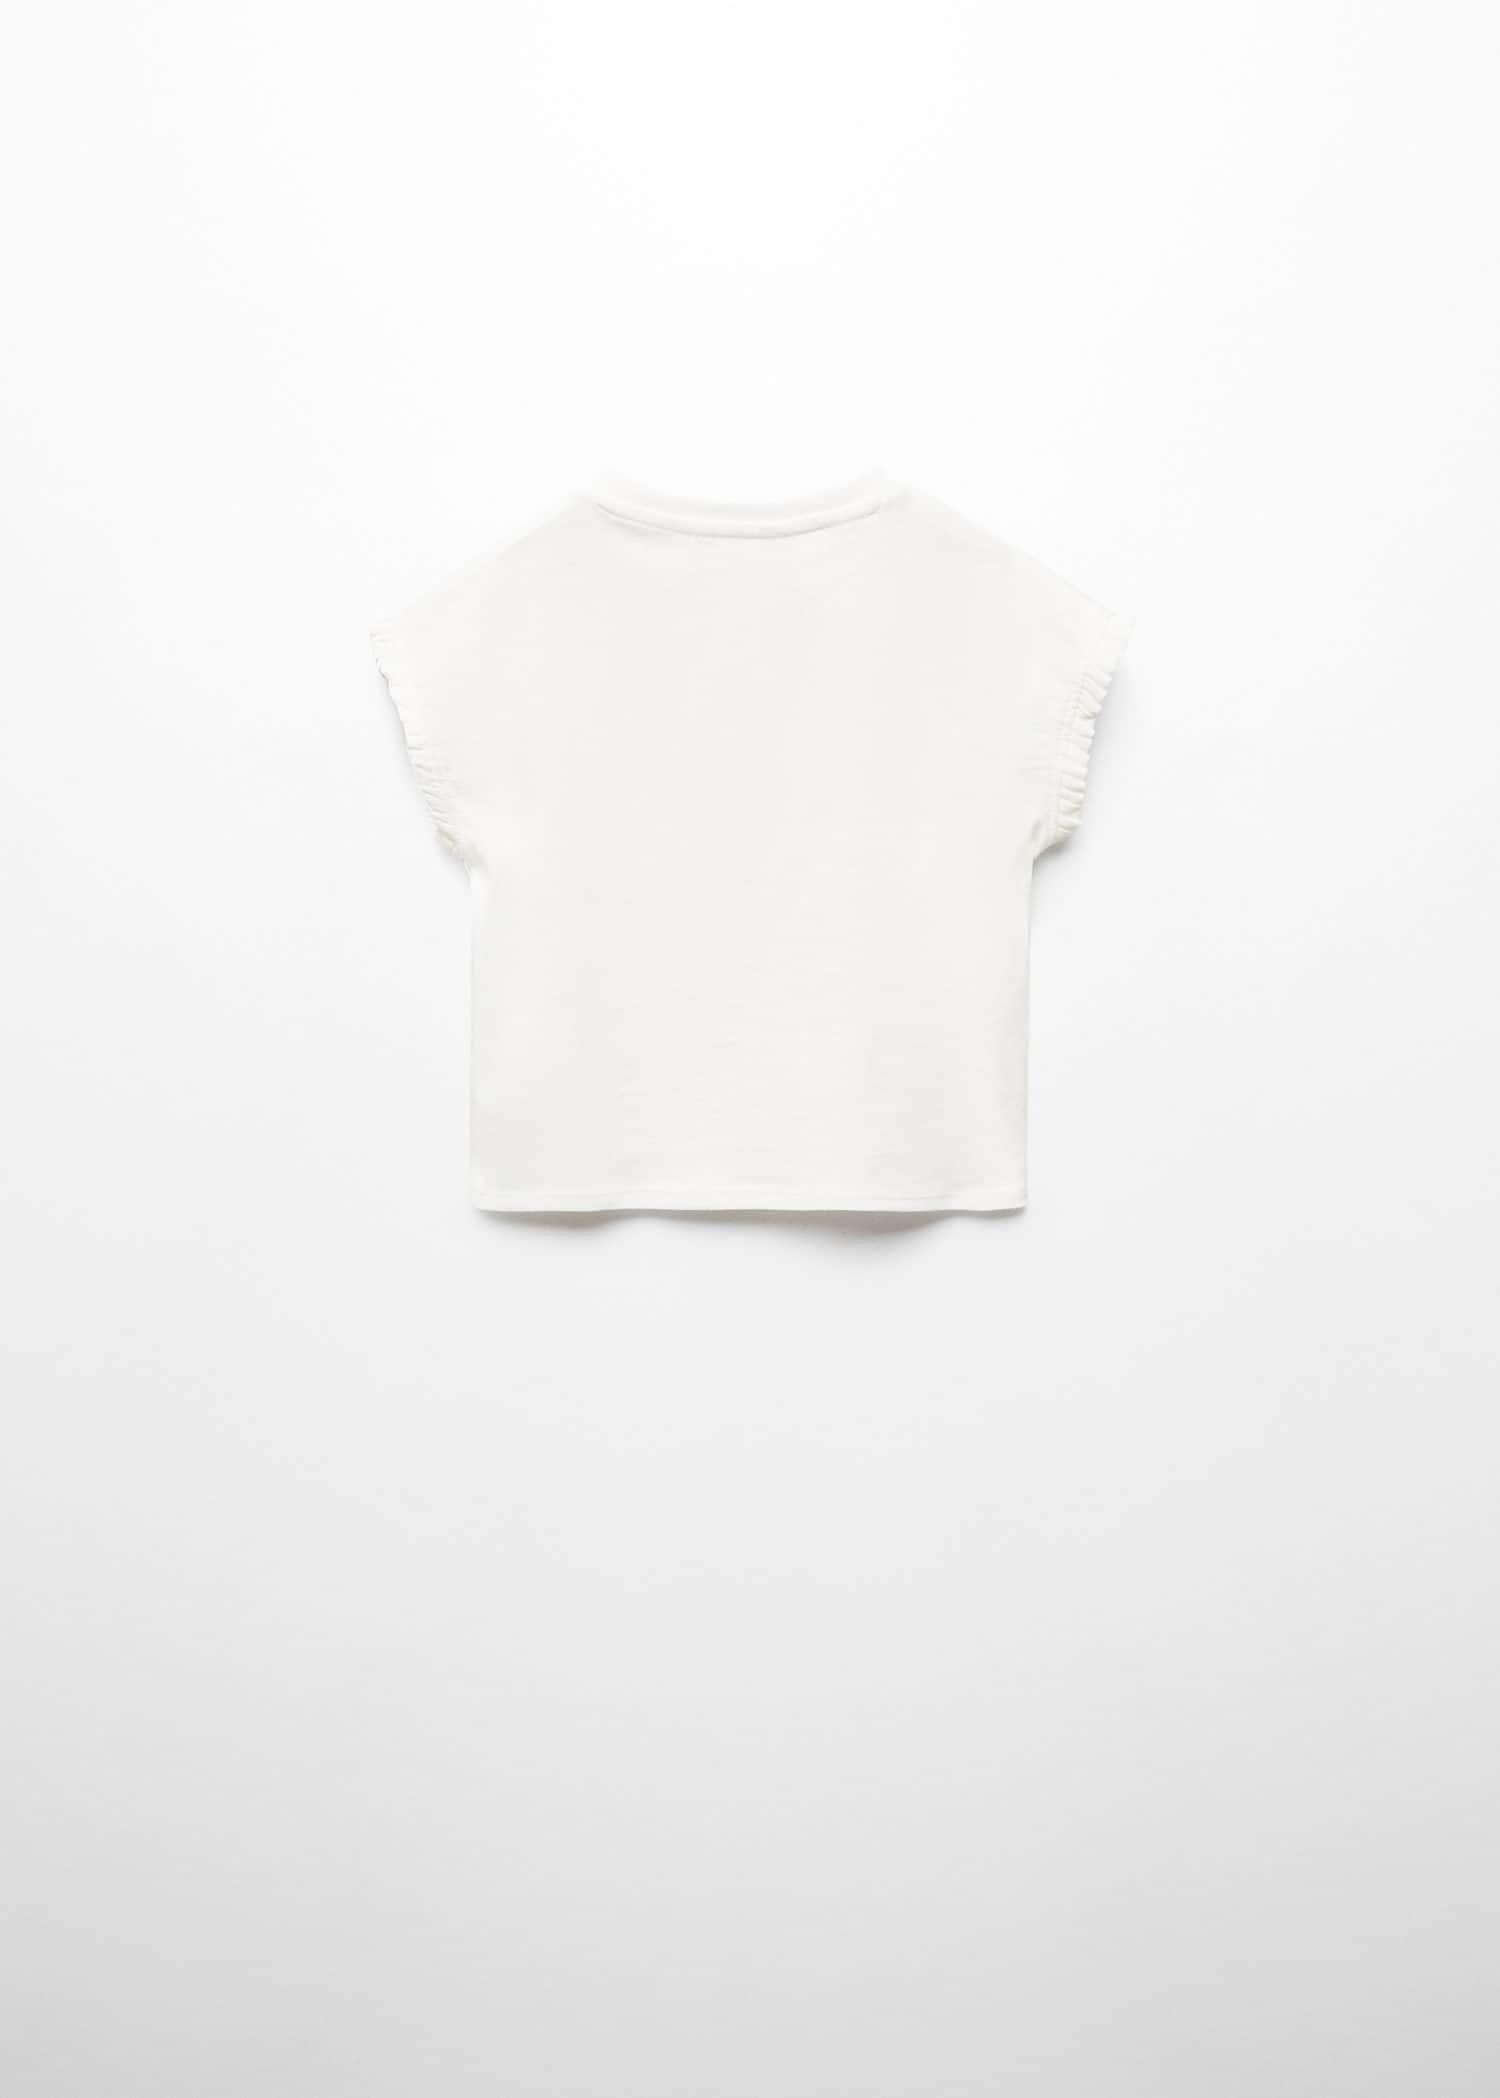 Mango - White Fringes Printed T-Shirt, Kids Girls